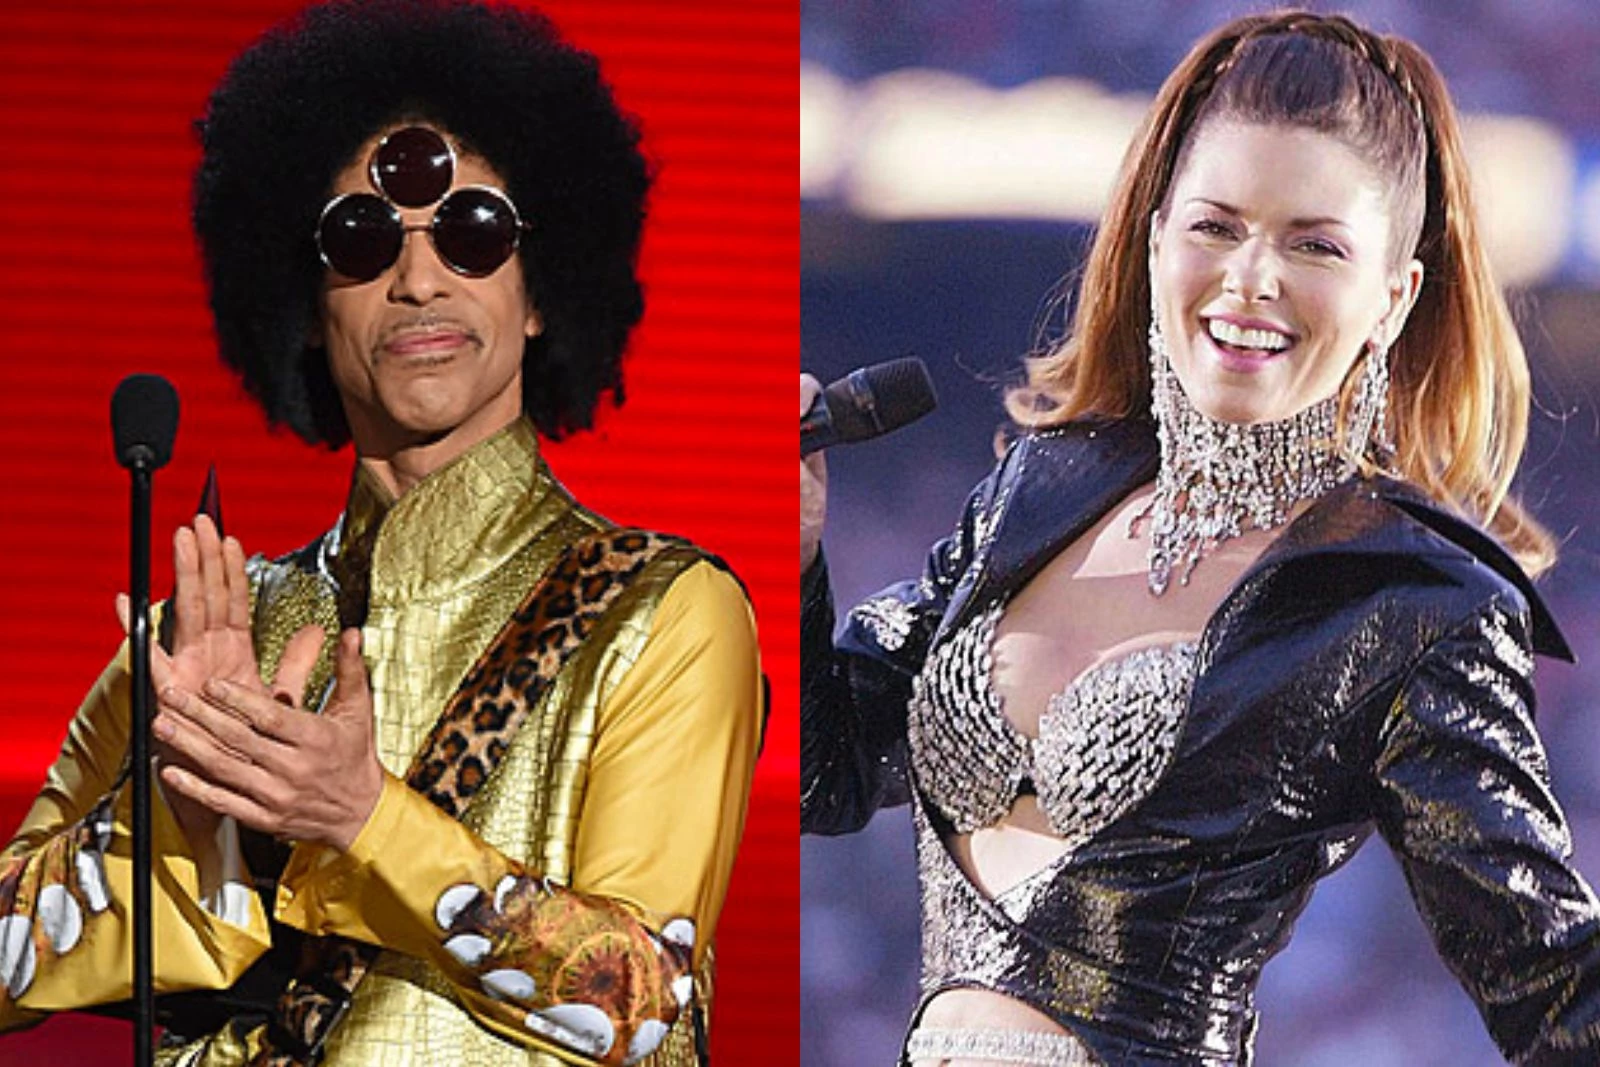 Prince Invited Shania Twain to Make the 'Next "Rumours" Album'